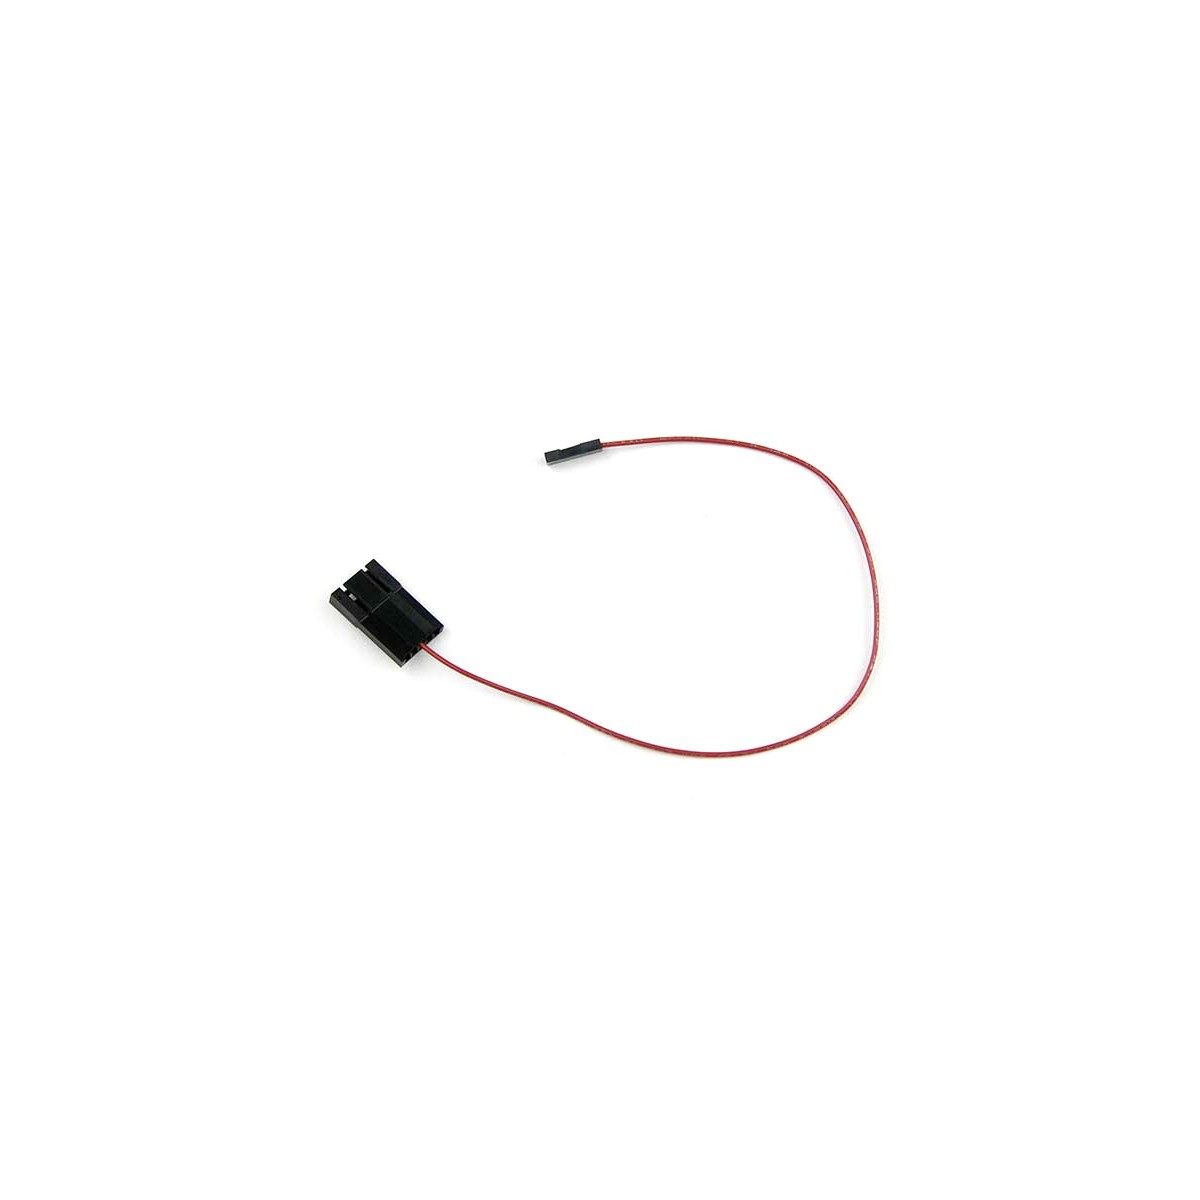 Supermicro CBL-CDAT-0596 - 0.22 m - 5-pin/2-pin - Black,Red - 1 pc(s)